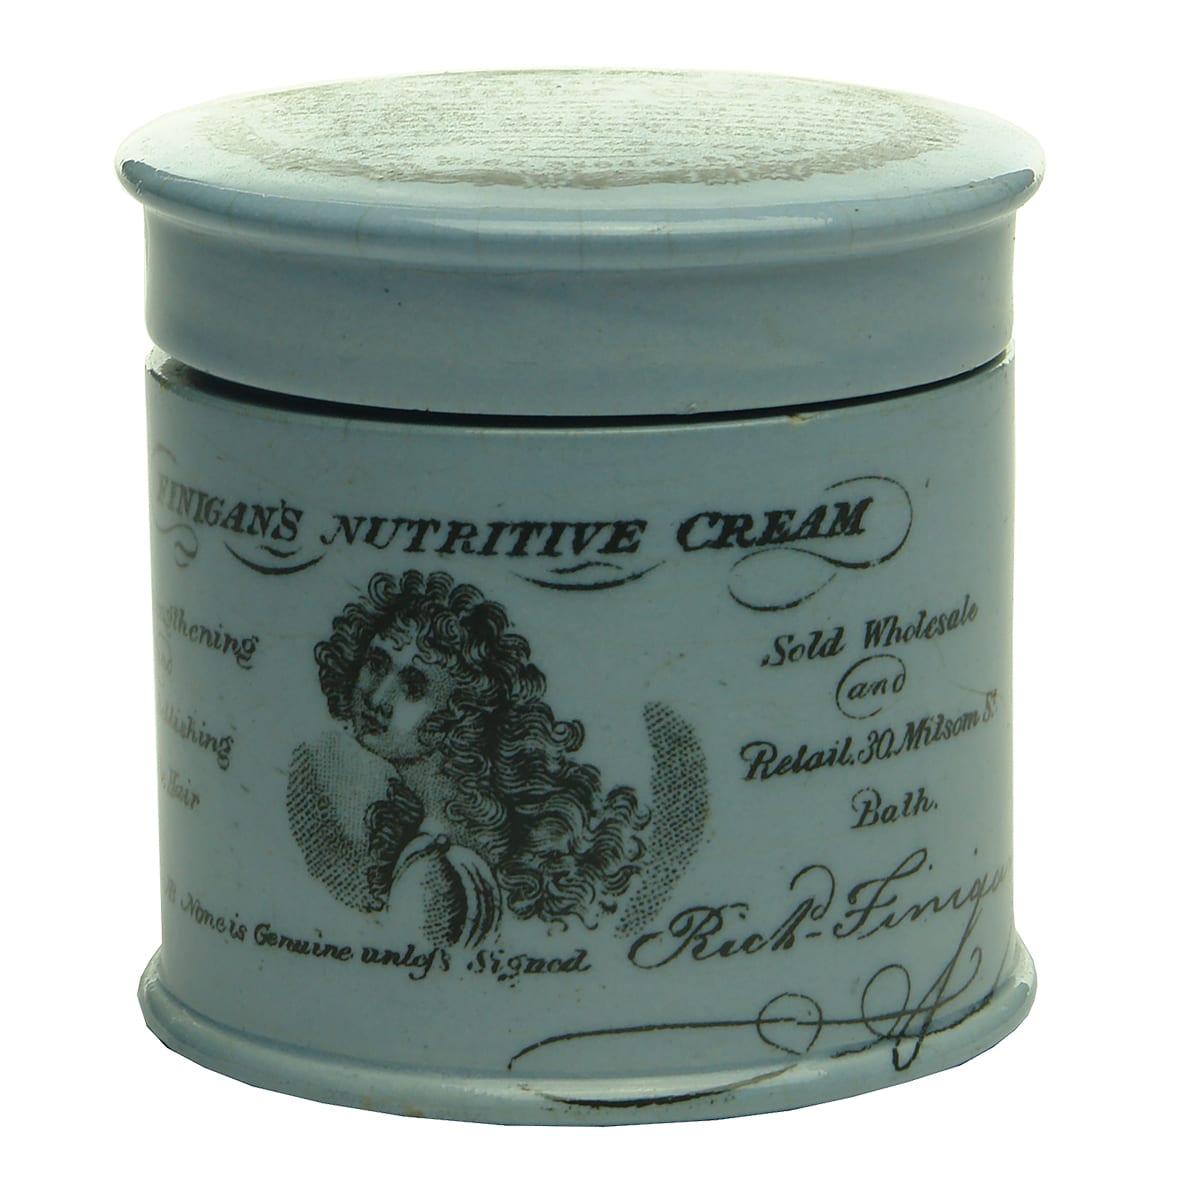 Pot Lid.  Finigan's Nutritive Cream, Bath.  Black print on blue lid and base.